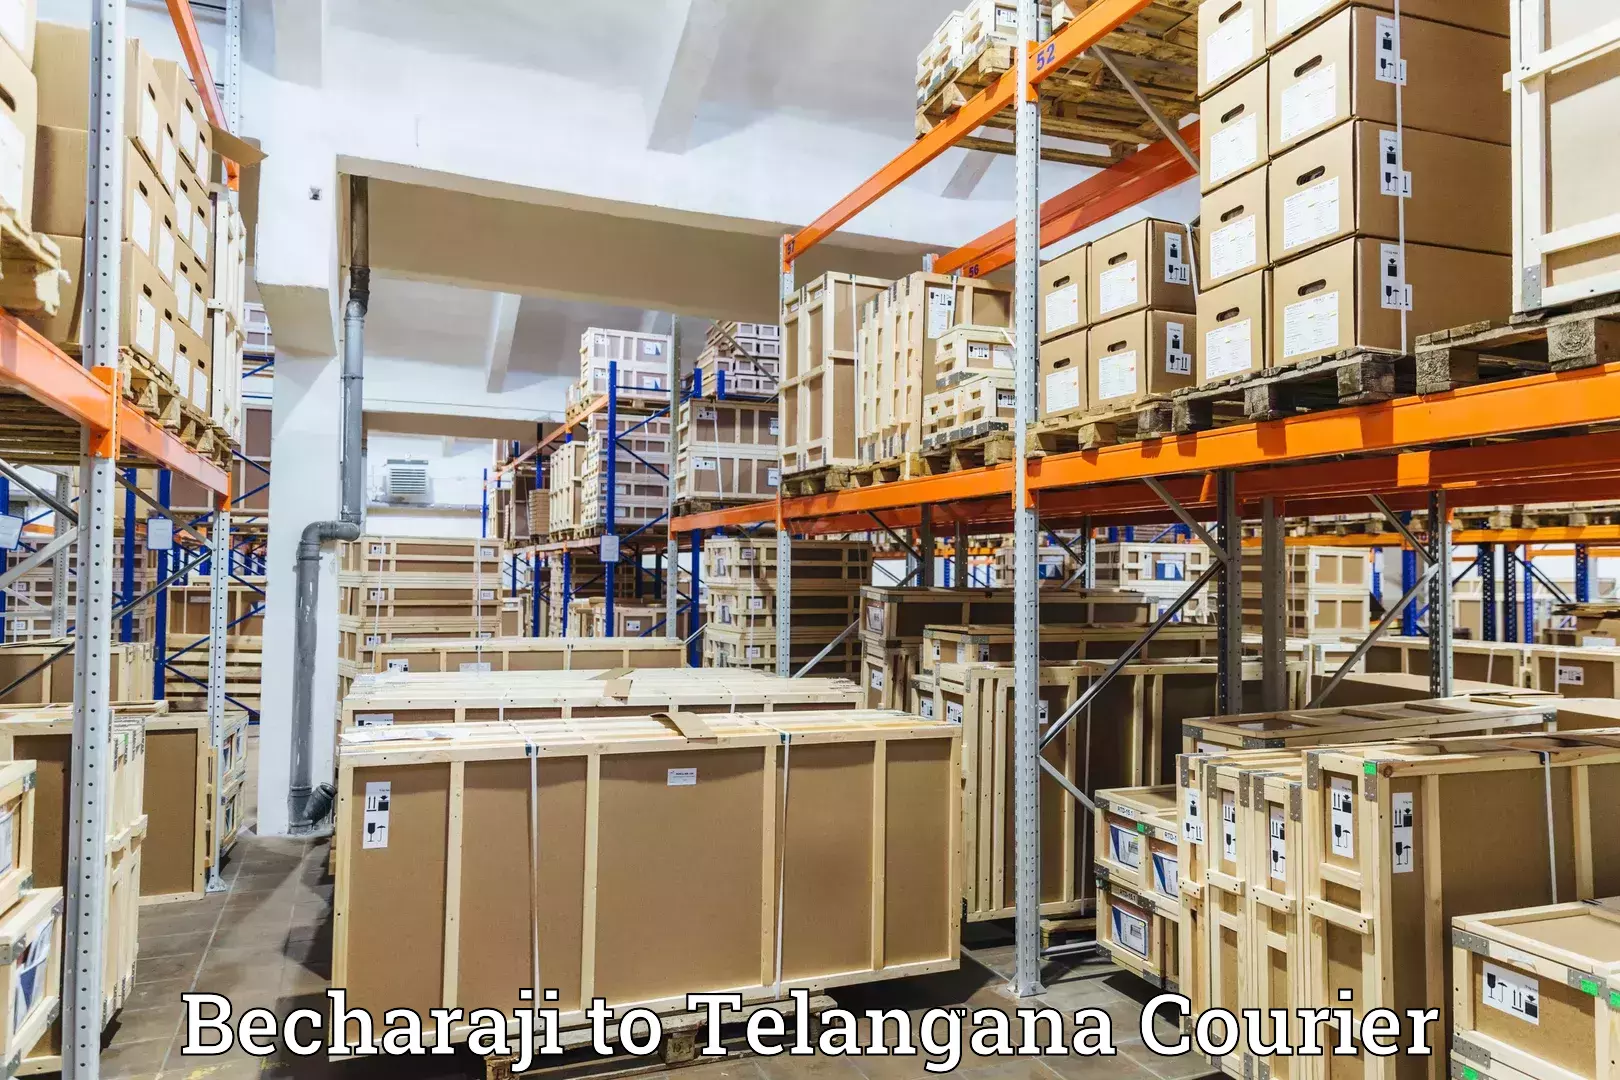 Courier service comparison Becharaji to Telangana